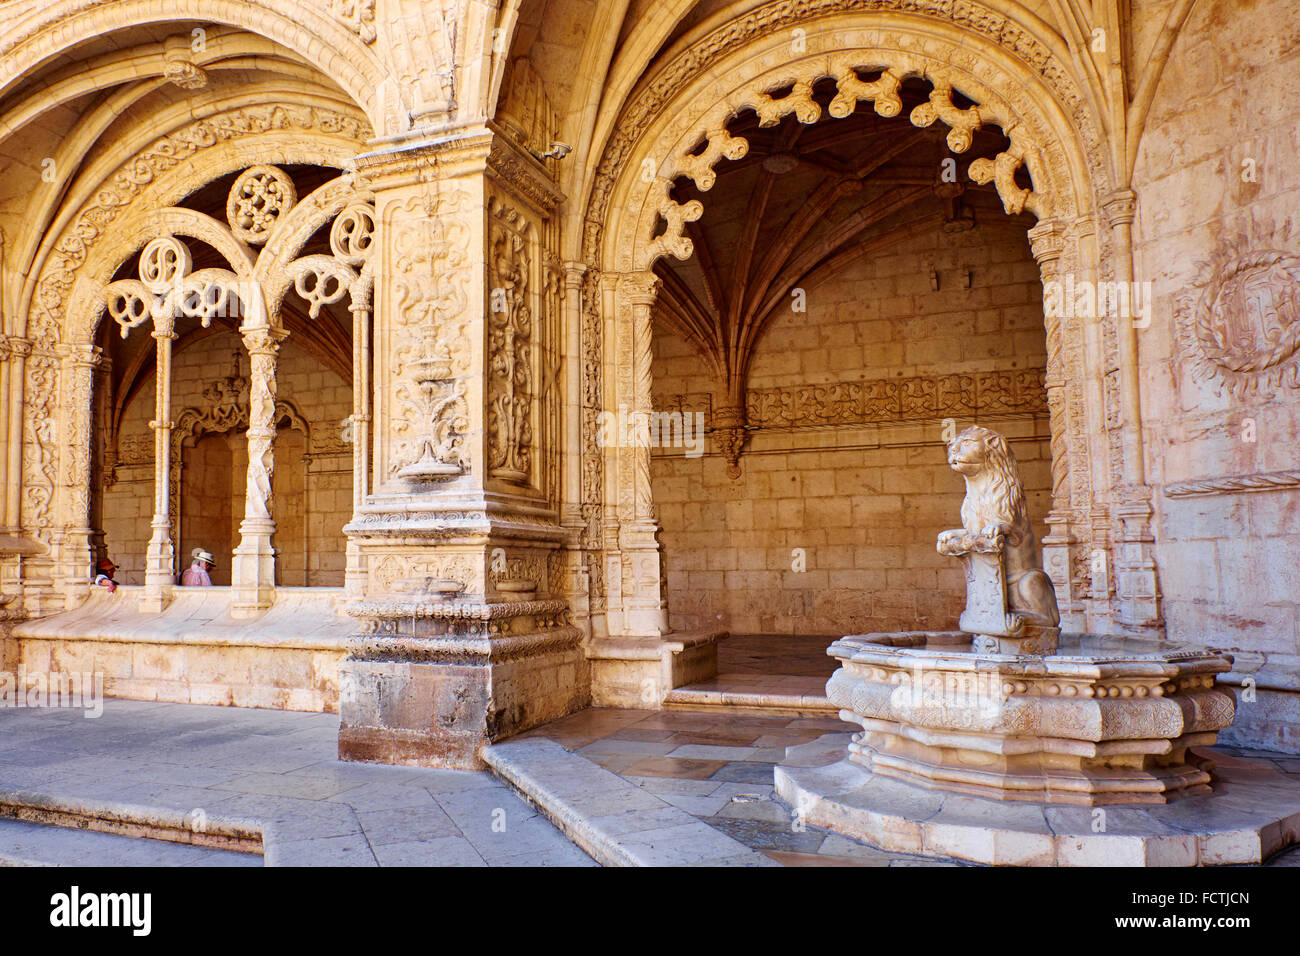 Portugal, Lisbon, mosteiro dos Jeronimos, Jeronimos monastery, UNESCO world heritage, the Lion fontain in the cloister Stock Photo